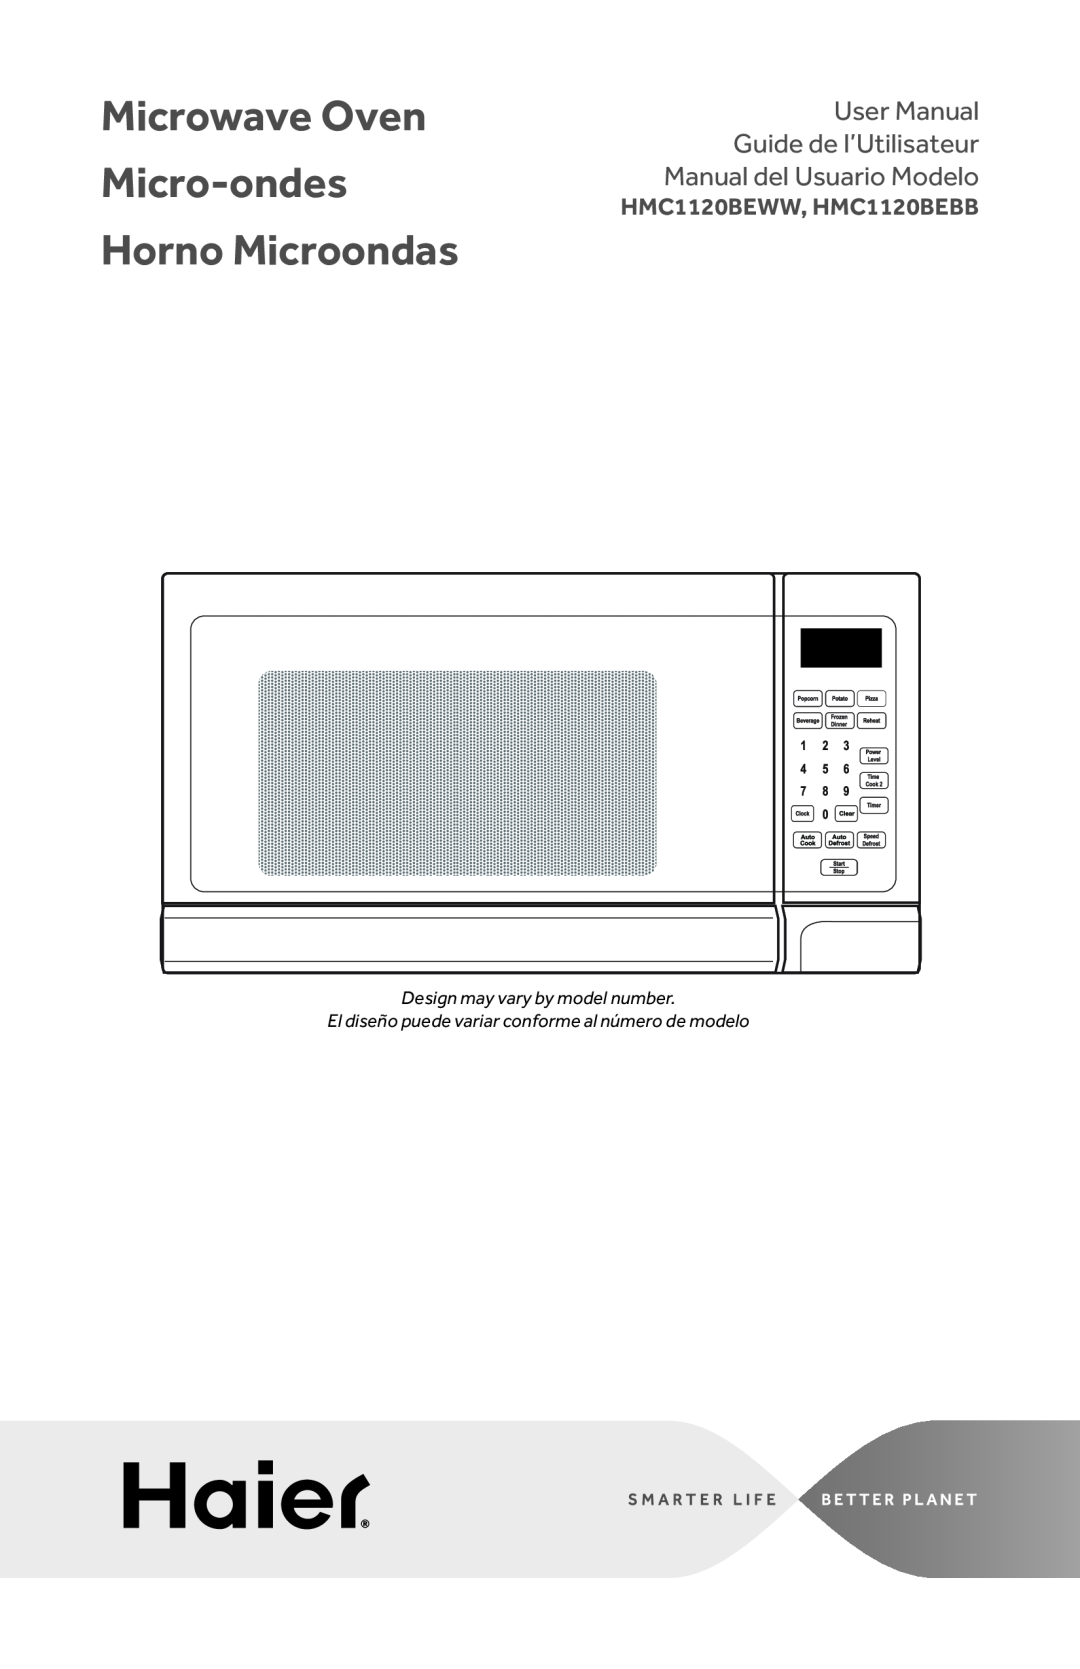 Haier user manual Microwave Oven Micro-ondes Horno Microondas, HMC1120BEWW, HMC1120BEBB 